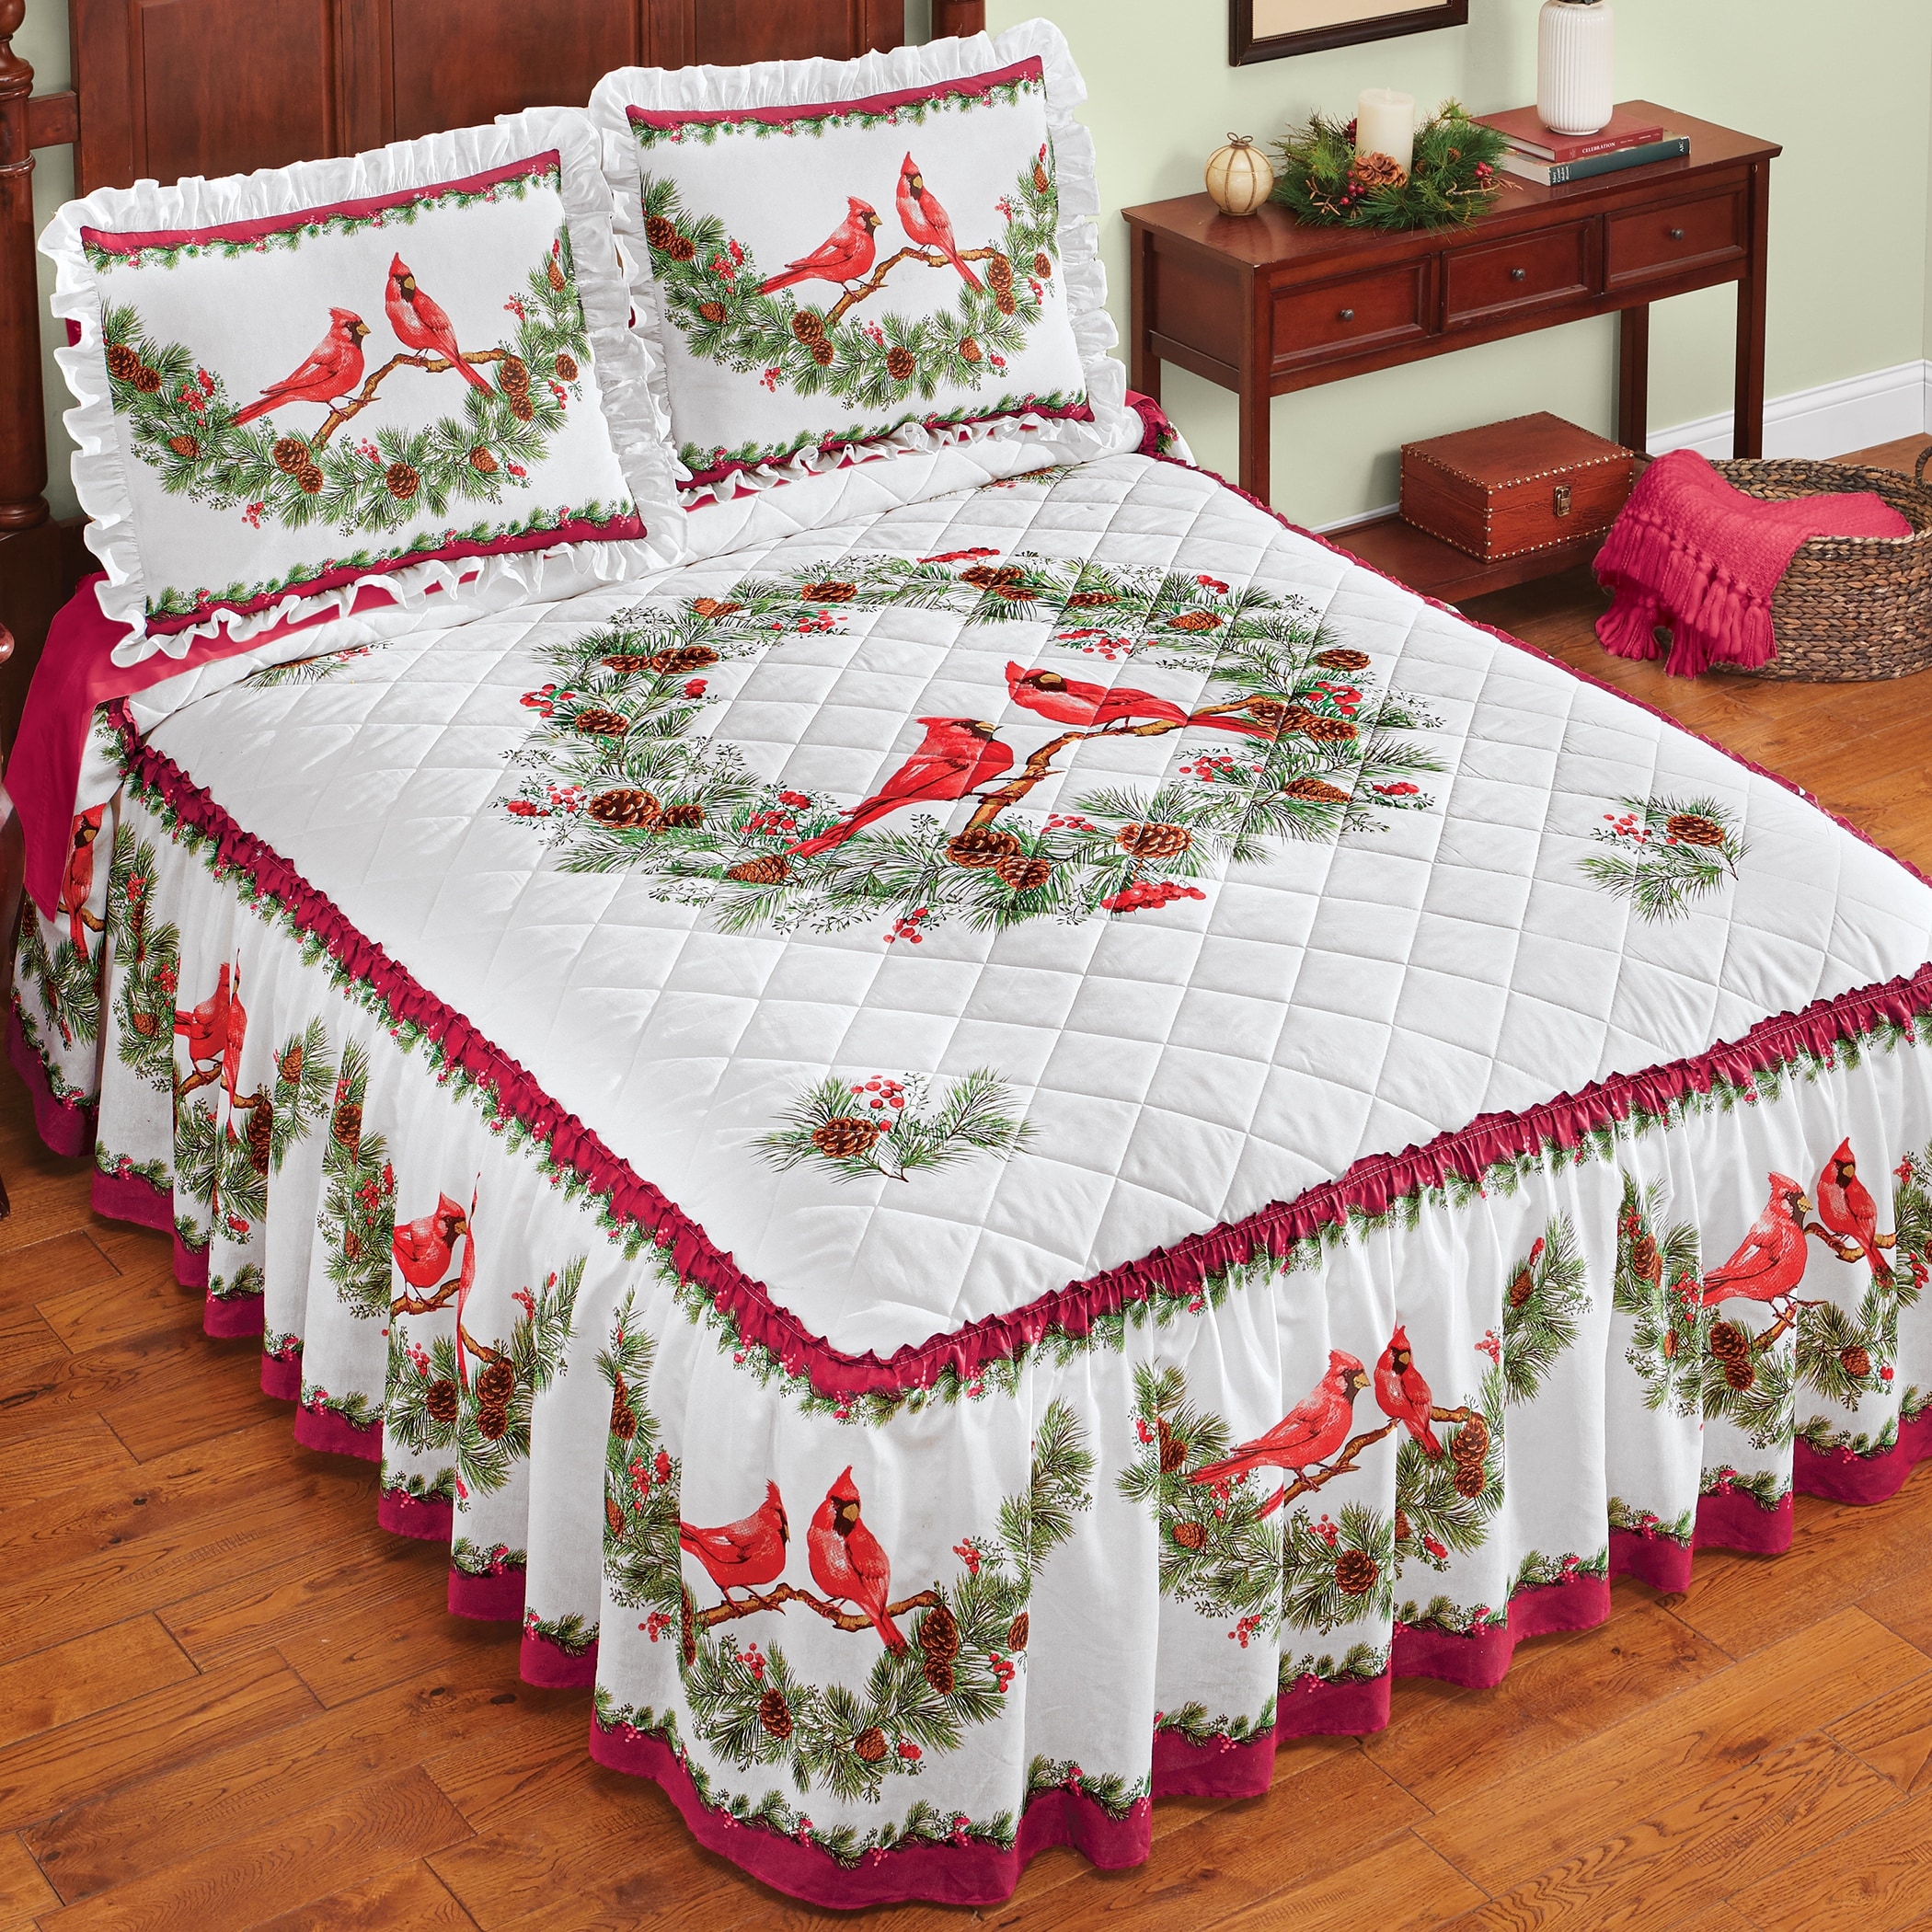 Ruffled Skirt Christmas Wreath and Cardinals Holiday Bedspread